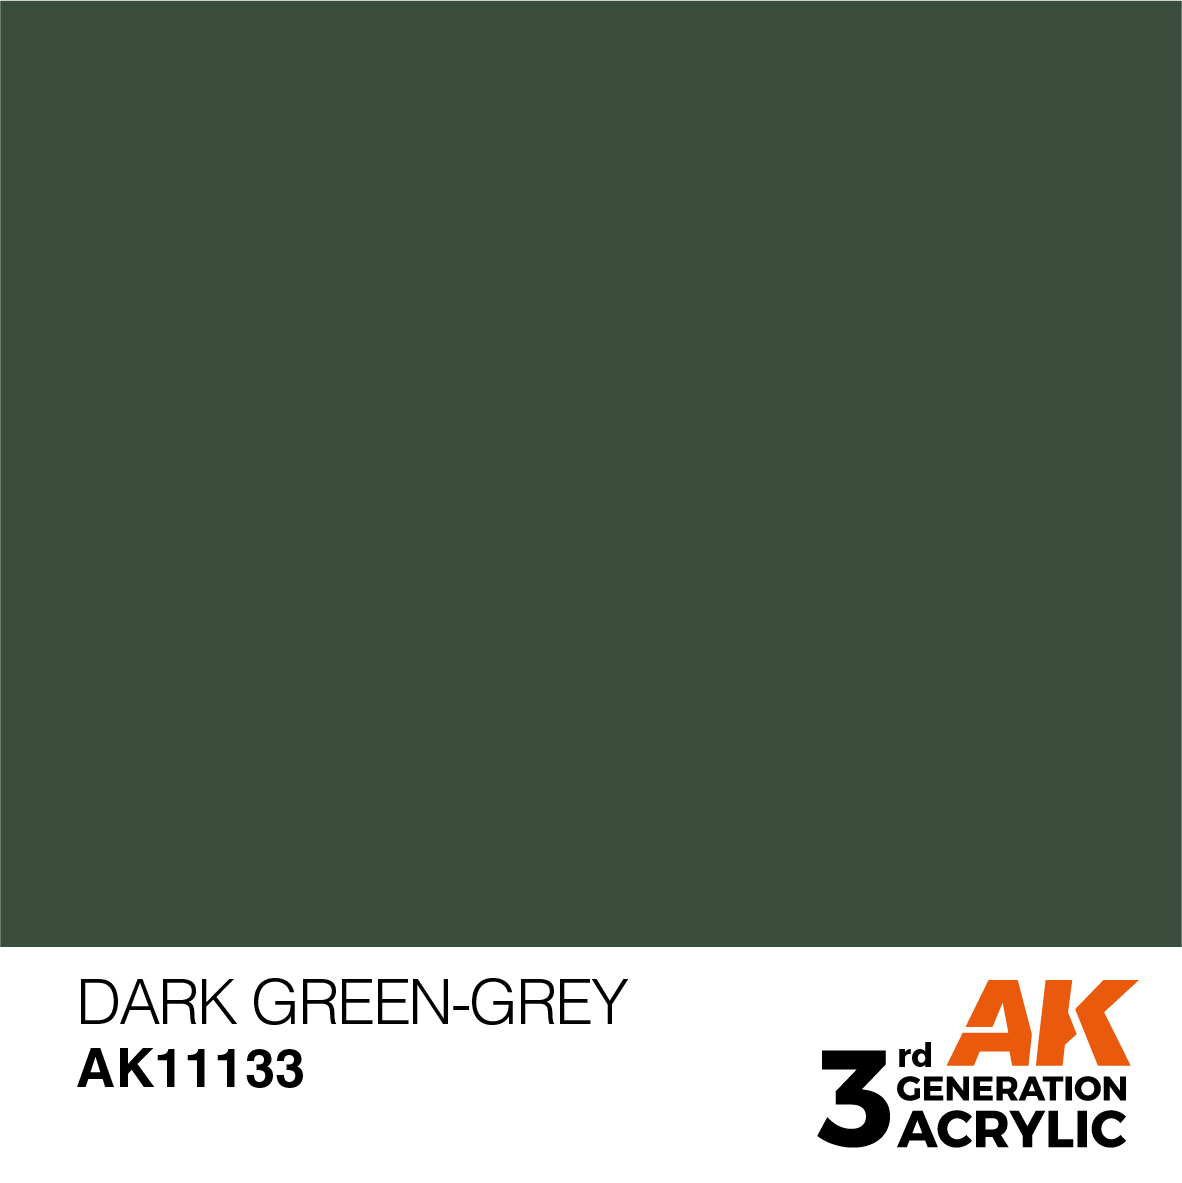 Buy DARK GREEN-GREY - STANDARD online for2,75€